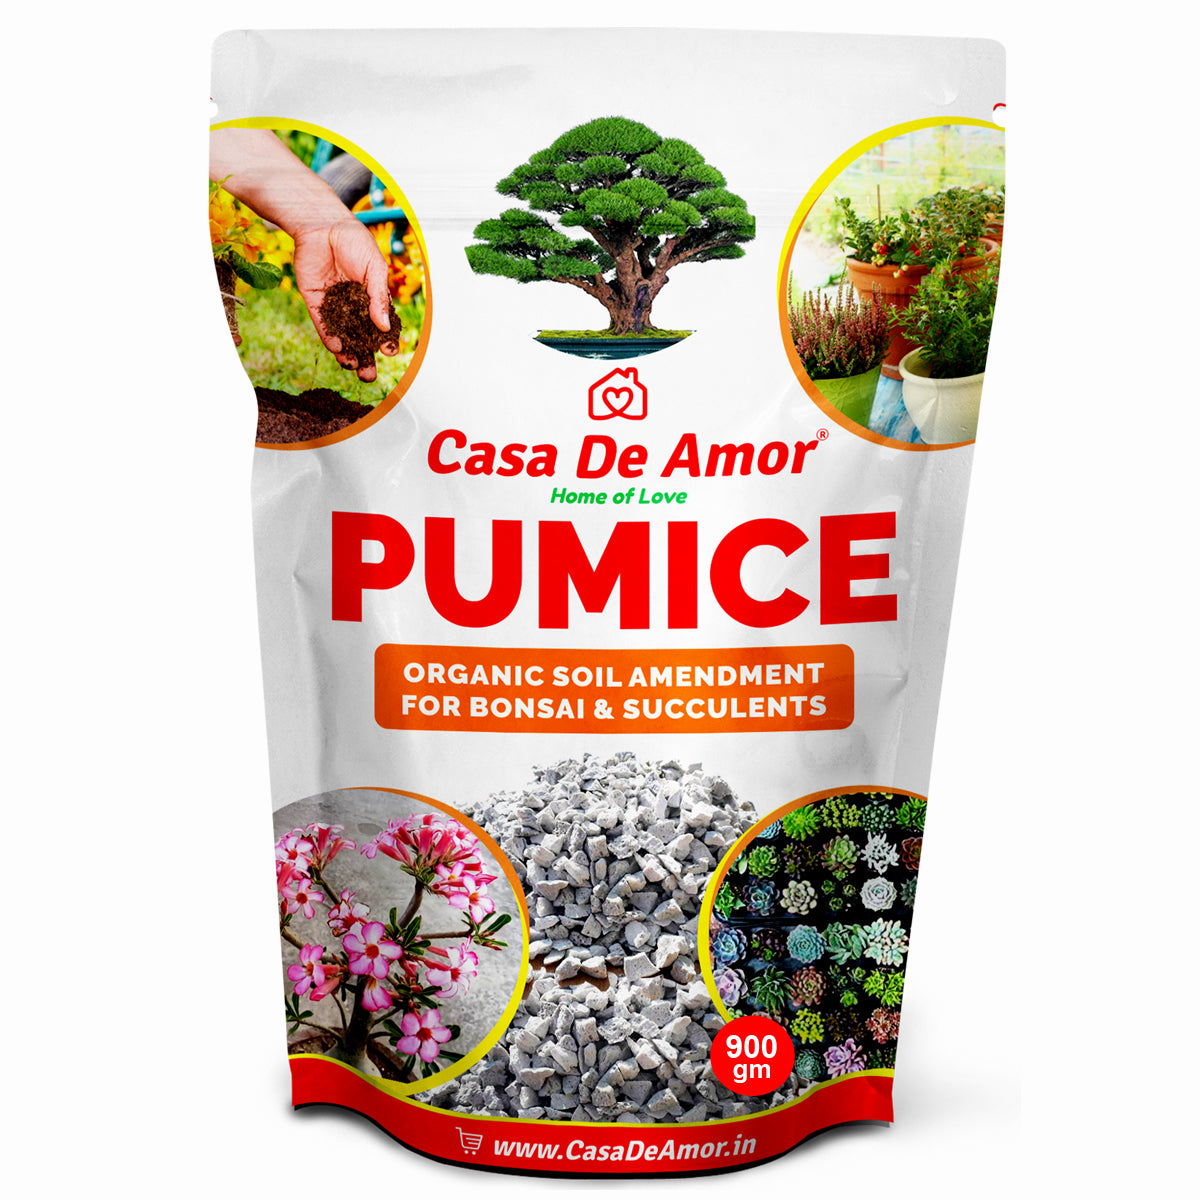 Casa De Amor Pumice Organic Soil Amendment for Bonsai, Succulents and Cactus Plants